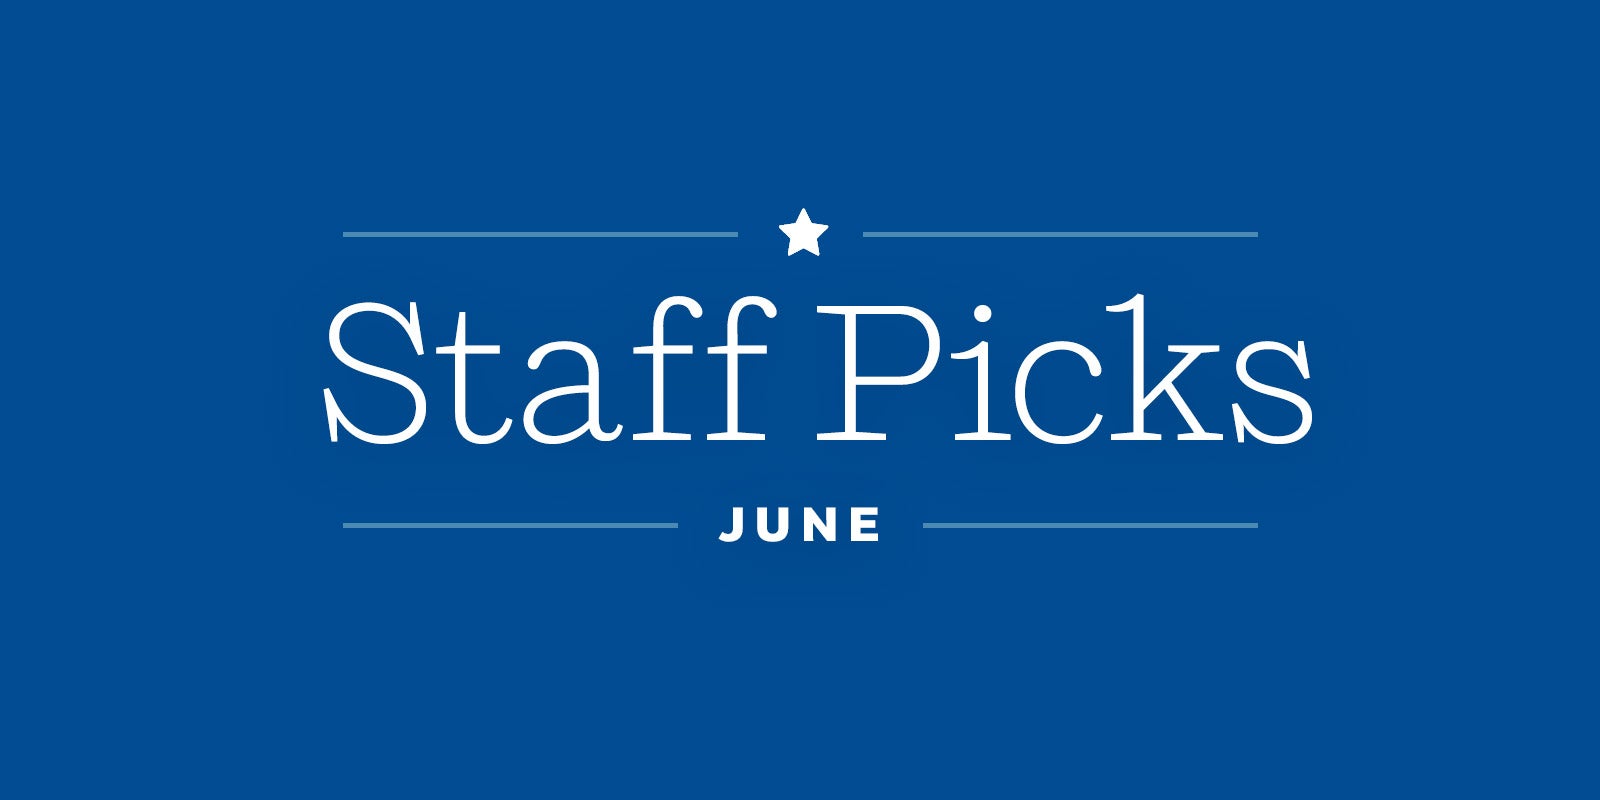 *June Staff Picks*